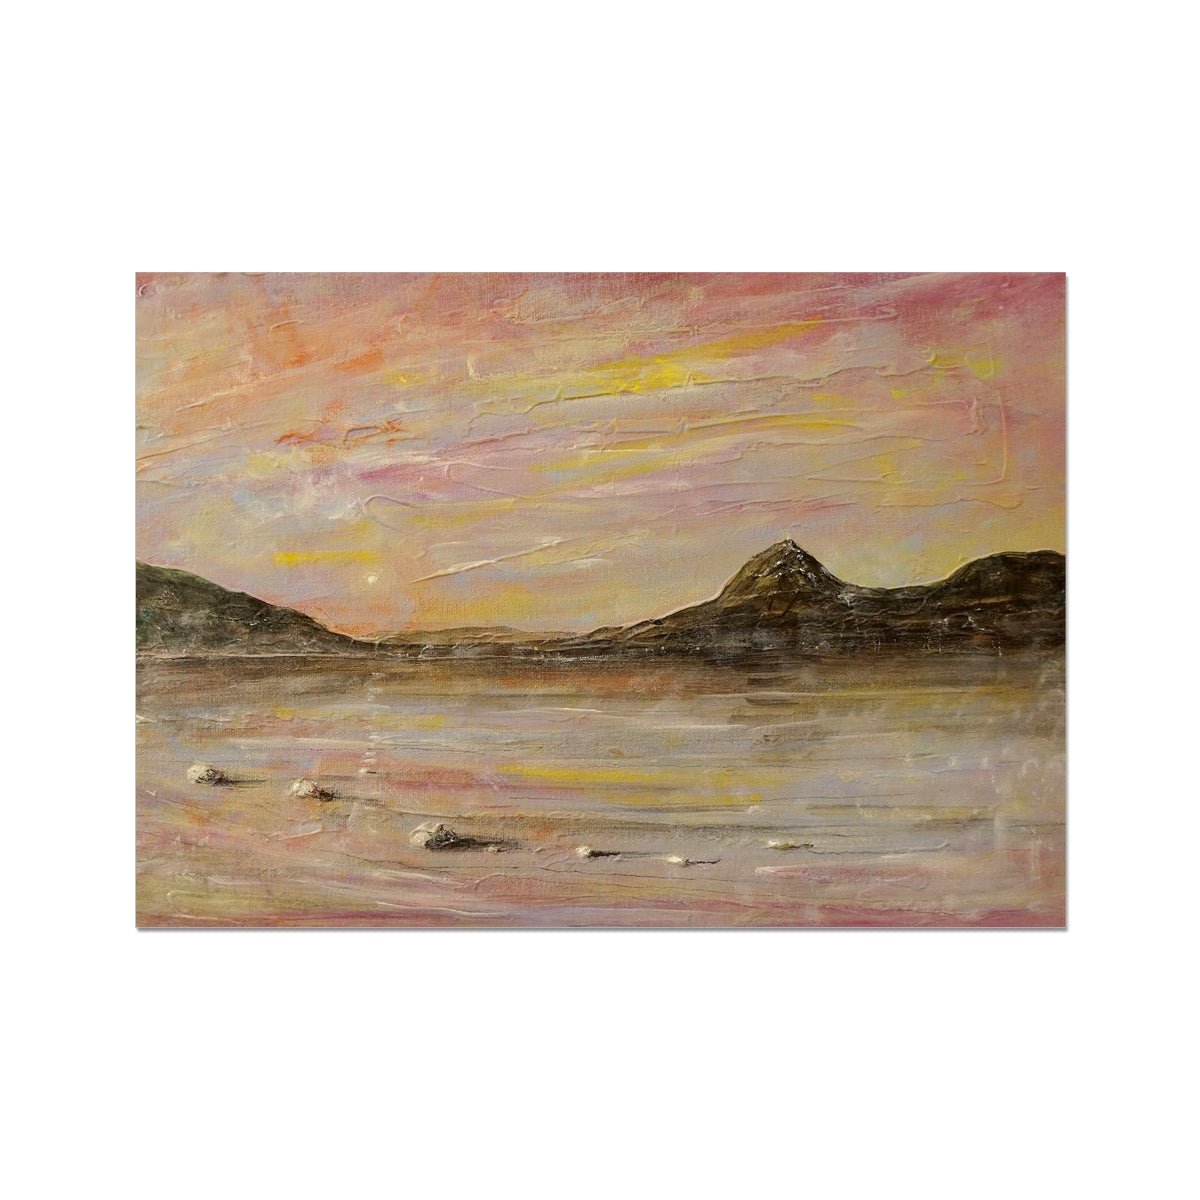 Loch Rannoch Dawn Painting | Fine Art Prints From Scotland-Unframed Prints-Scottish Lochs & Mountains Art Gallery-A2 Landscape-Paintings, Prints, Homeware, Art Gifts From Scotland By Scottish Artist Kevin Hunter